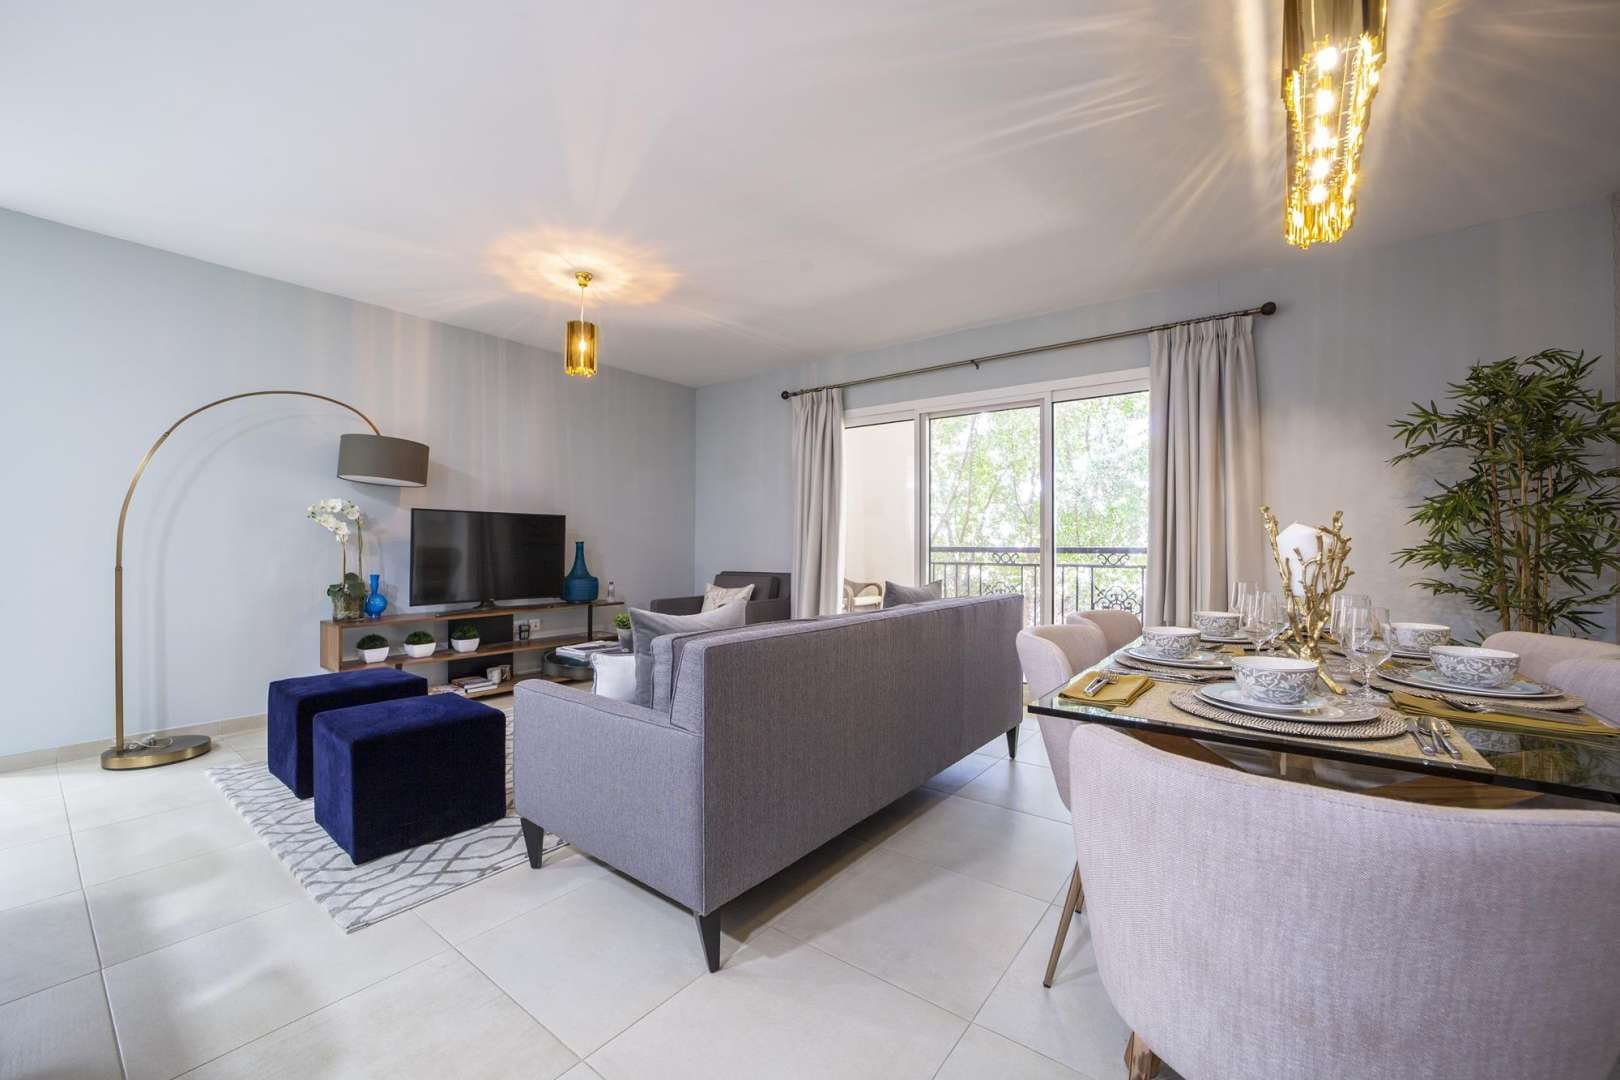 2 Bedroom Apartment For Sale Al Andalus Apartments Lp05540 1c7bb4c85262a700.jpg